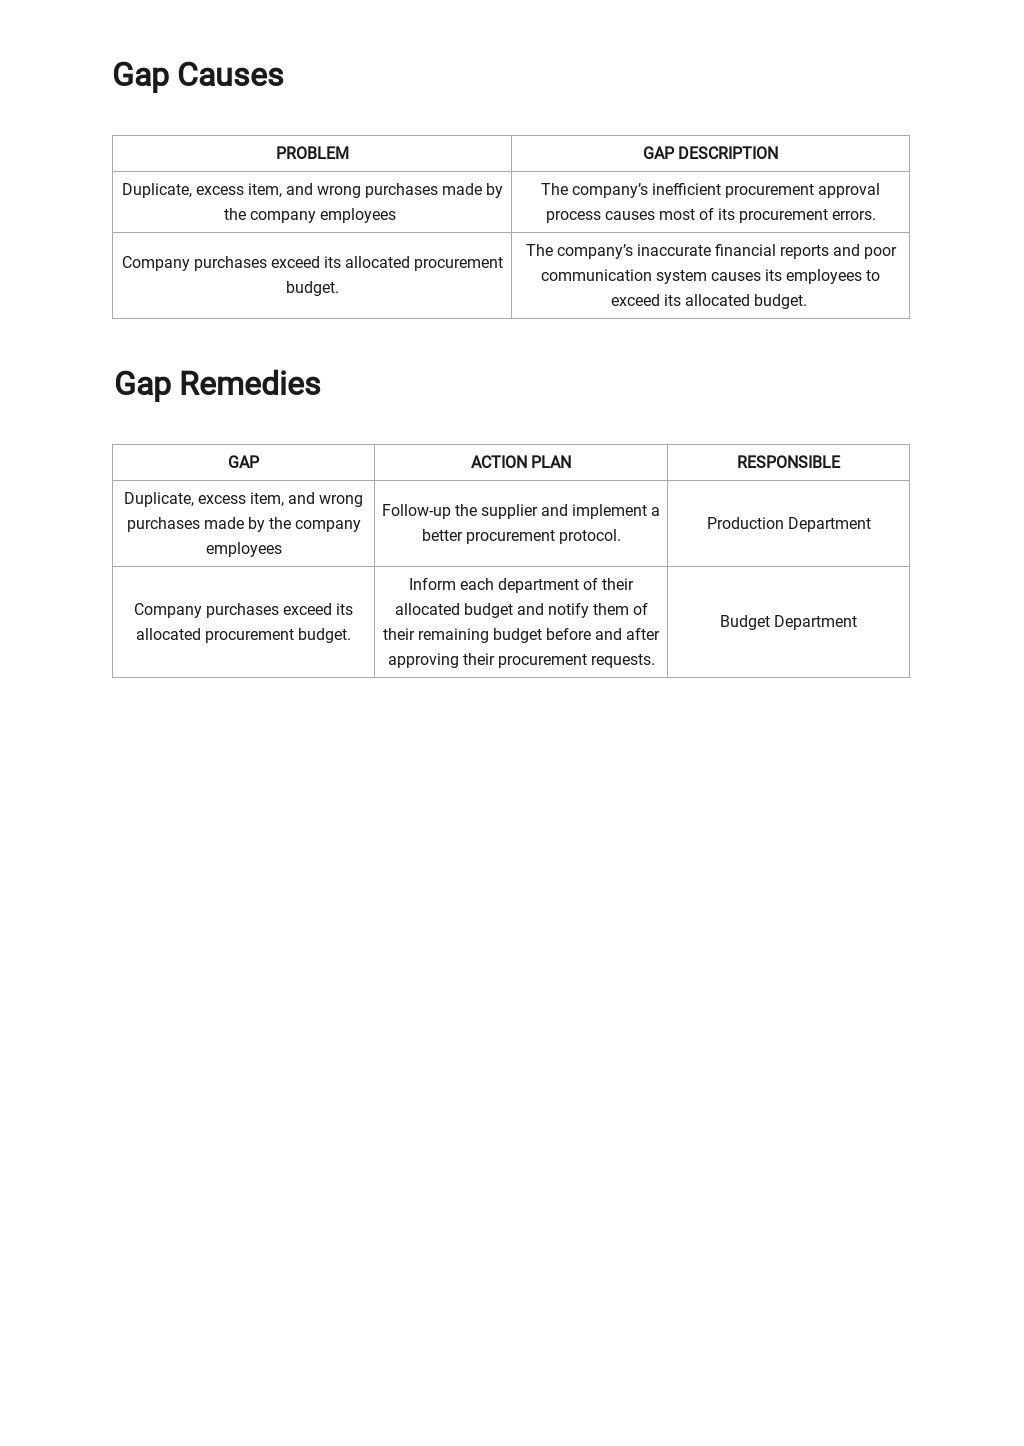 Business Process Gap Analysis Template 2.jpe